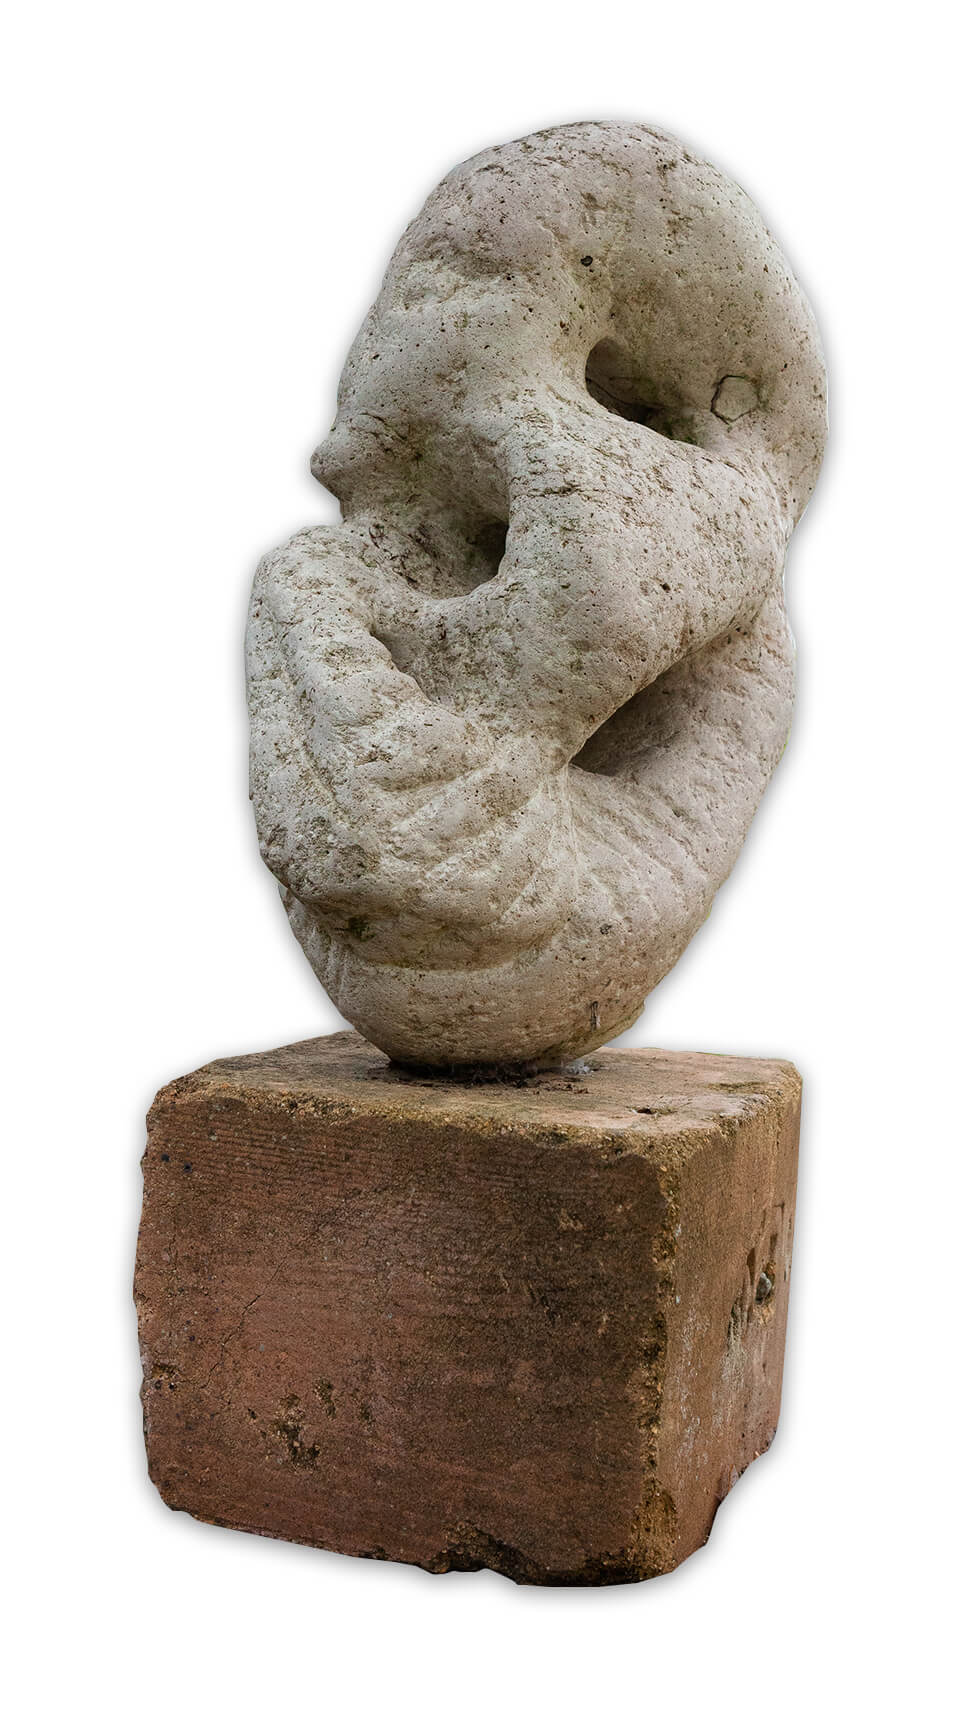 Slangenmens - pierre - 1992 - 0.68m x 0.30m